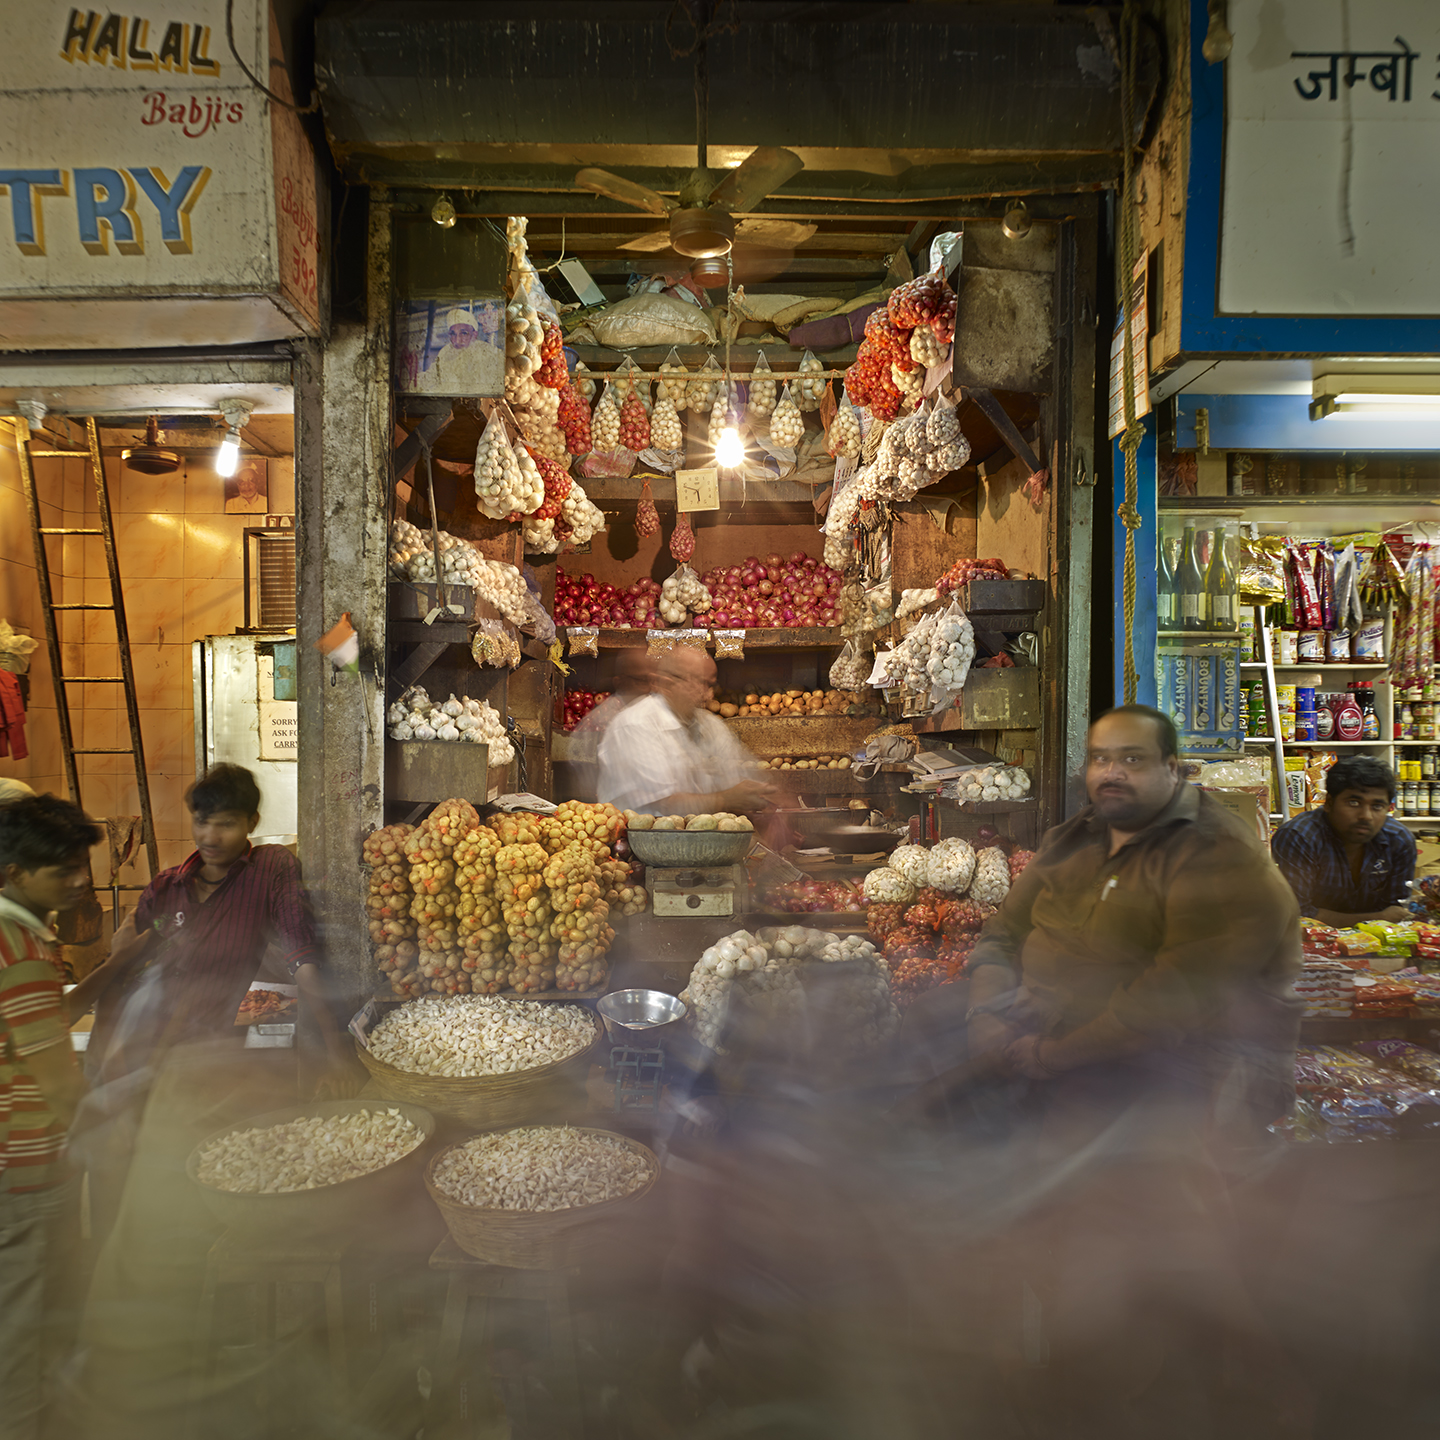 Crawford Market #7, Mumbai, India, 2013